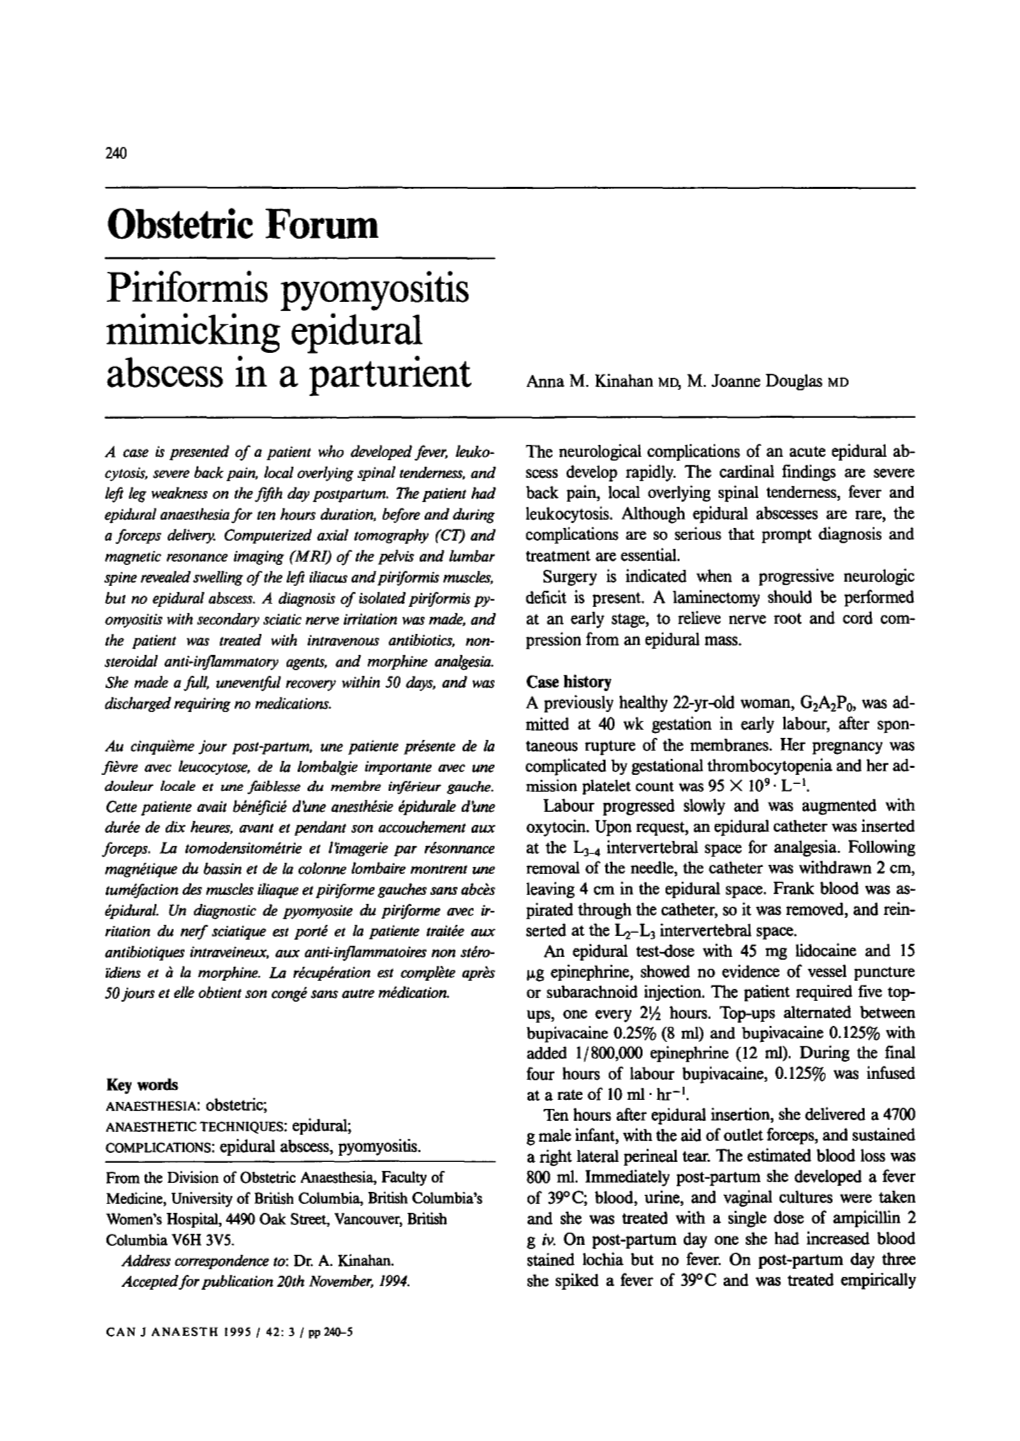 Piriformis Pyomyositis Mimicking Epidural Abscess in a Parturient Anna M